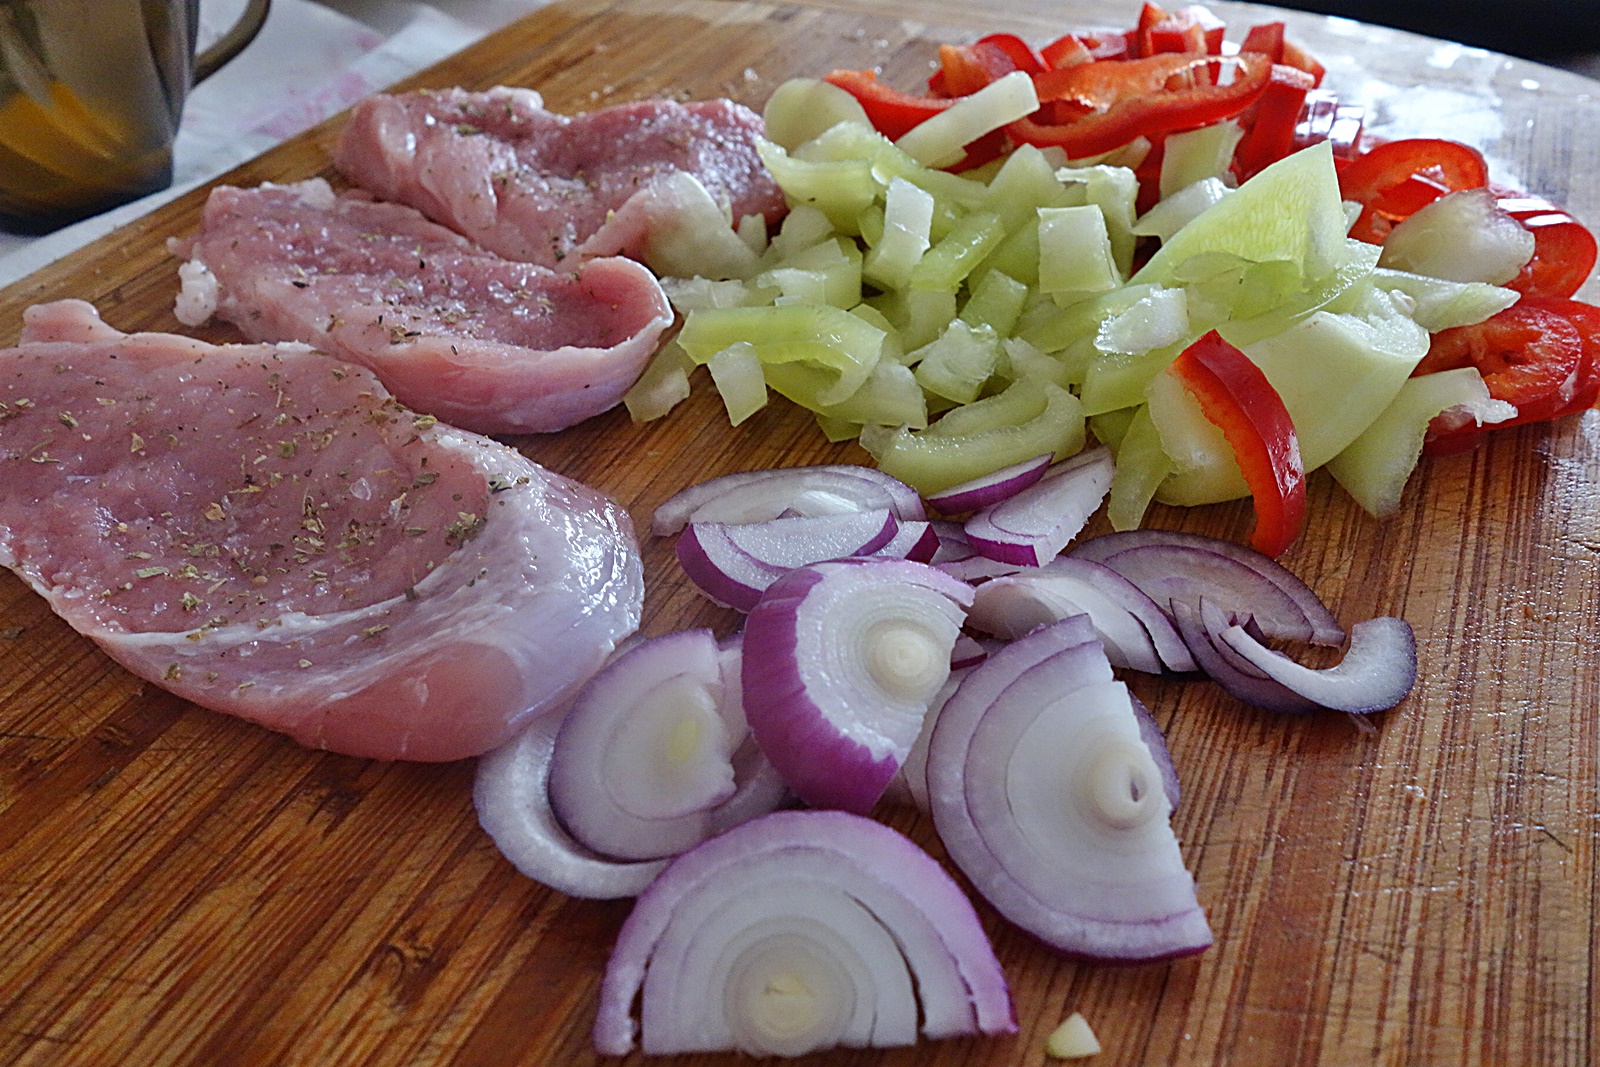 Turtite din cartofi cu legume sotate si muschiulet de porc